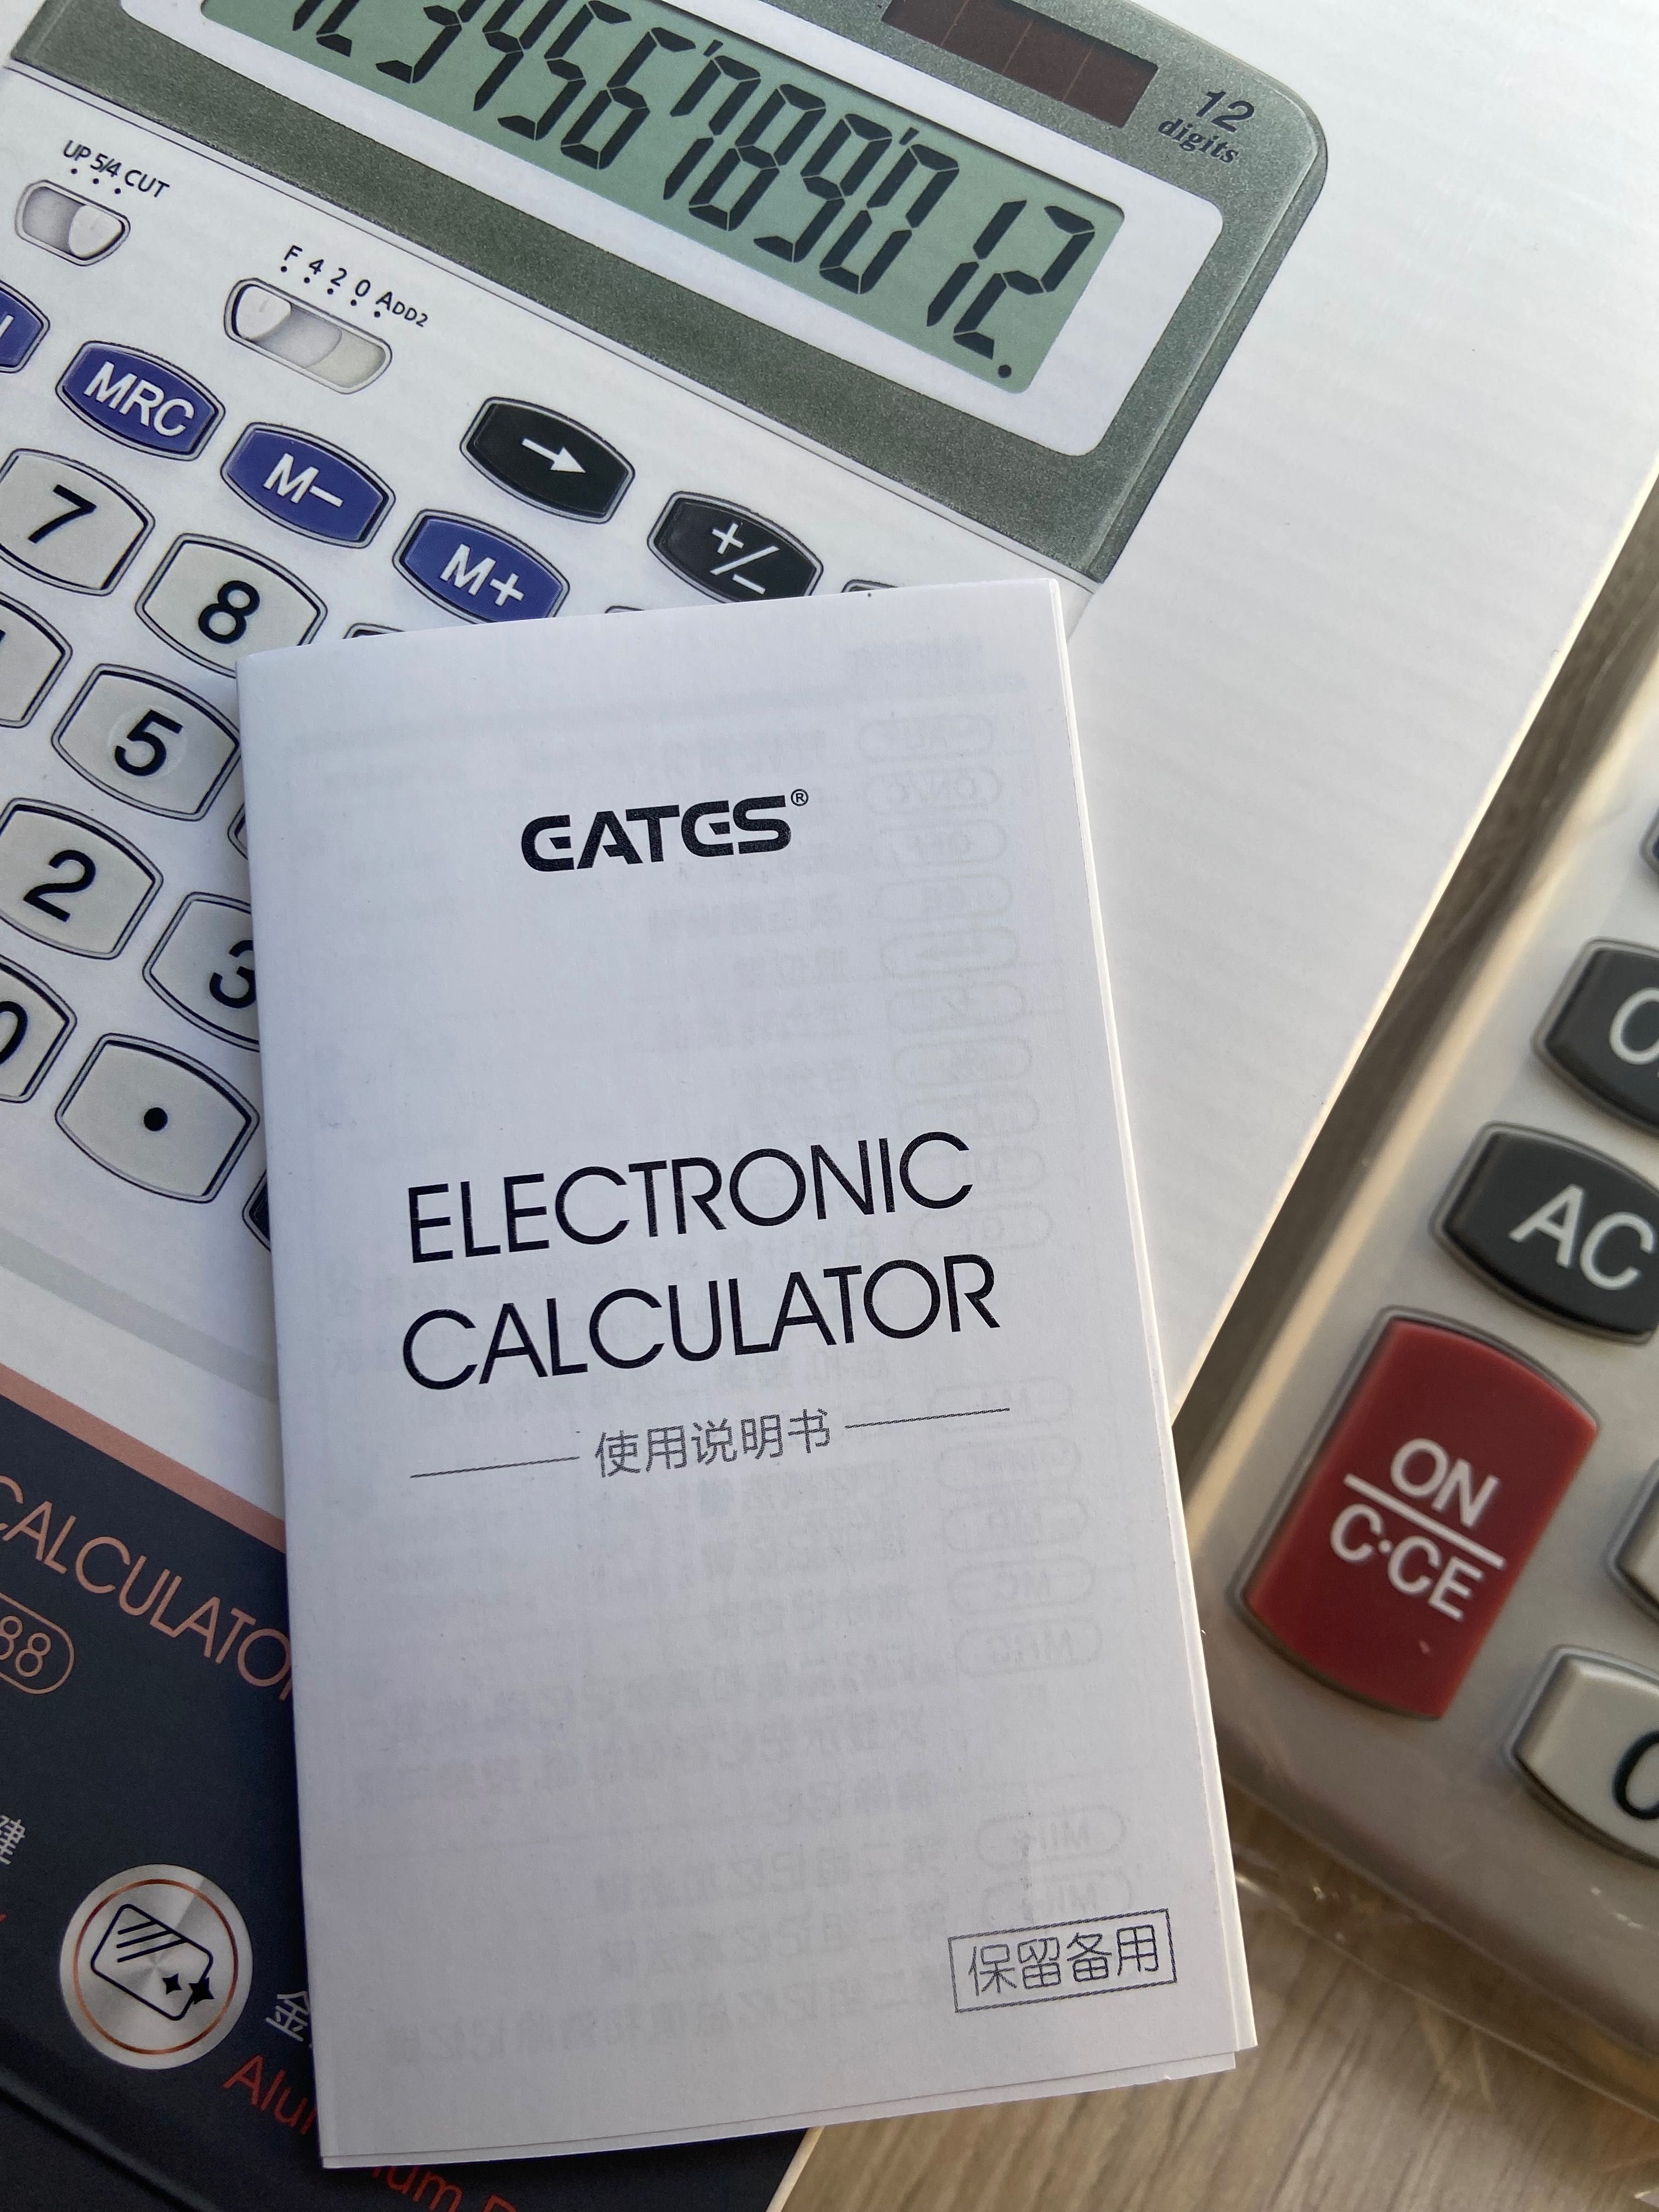 Калькулятор EATES DC-1988